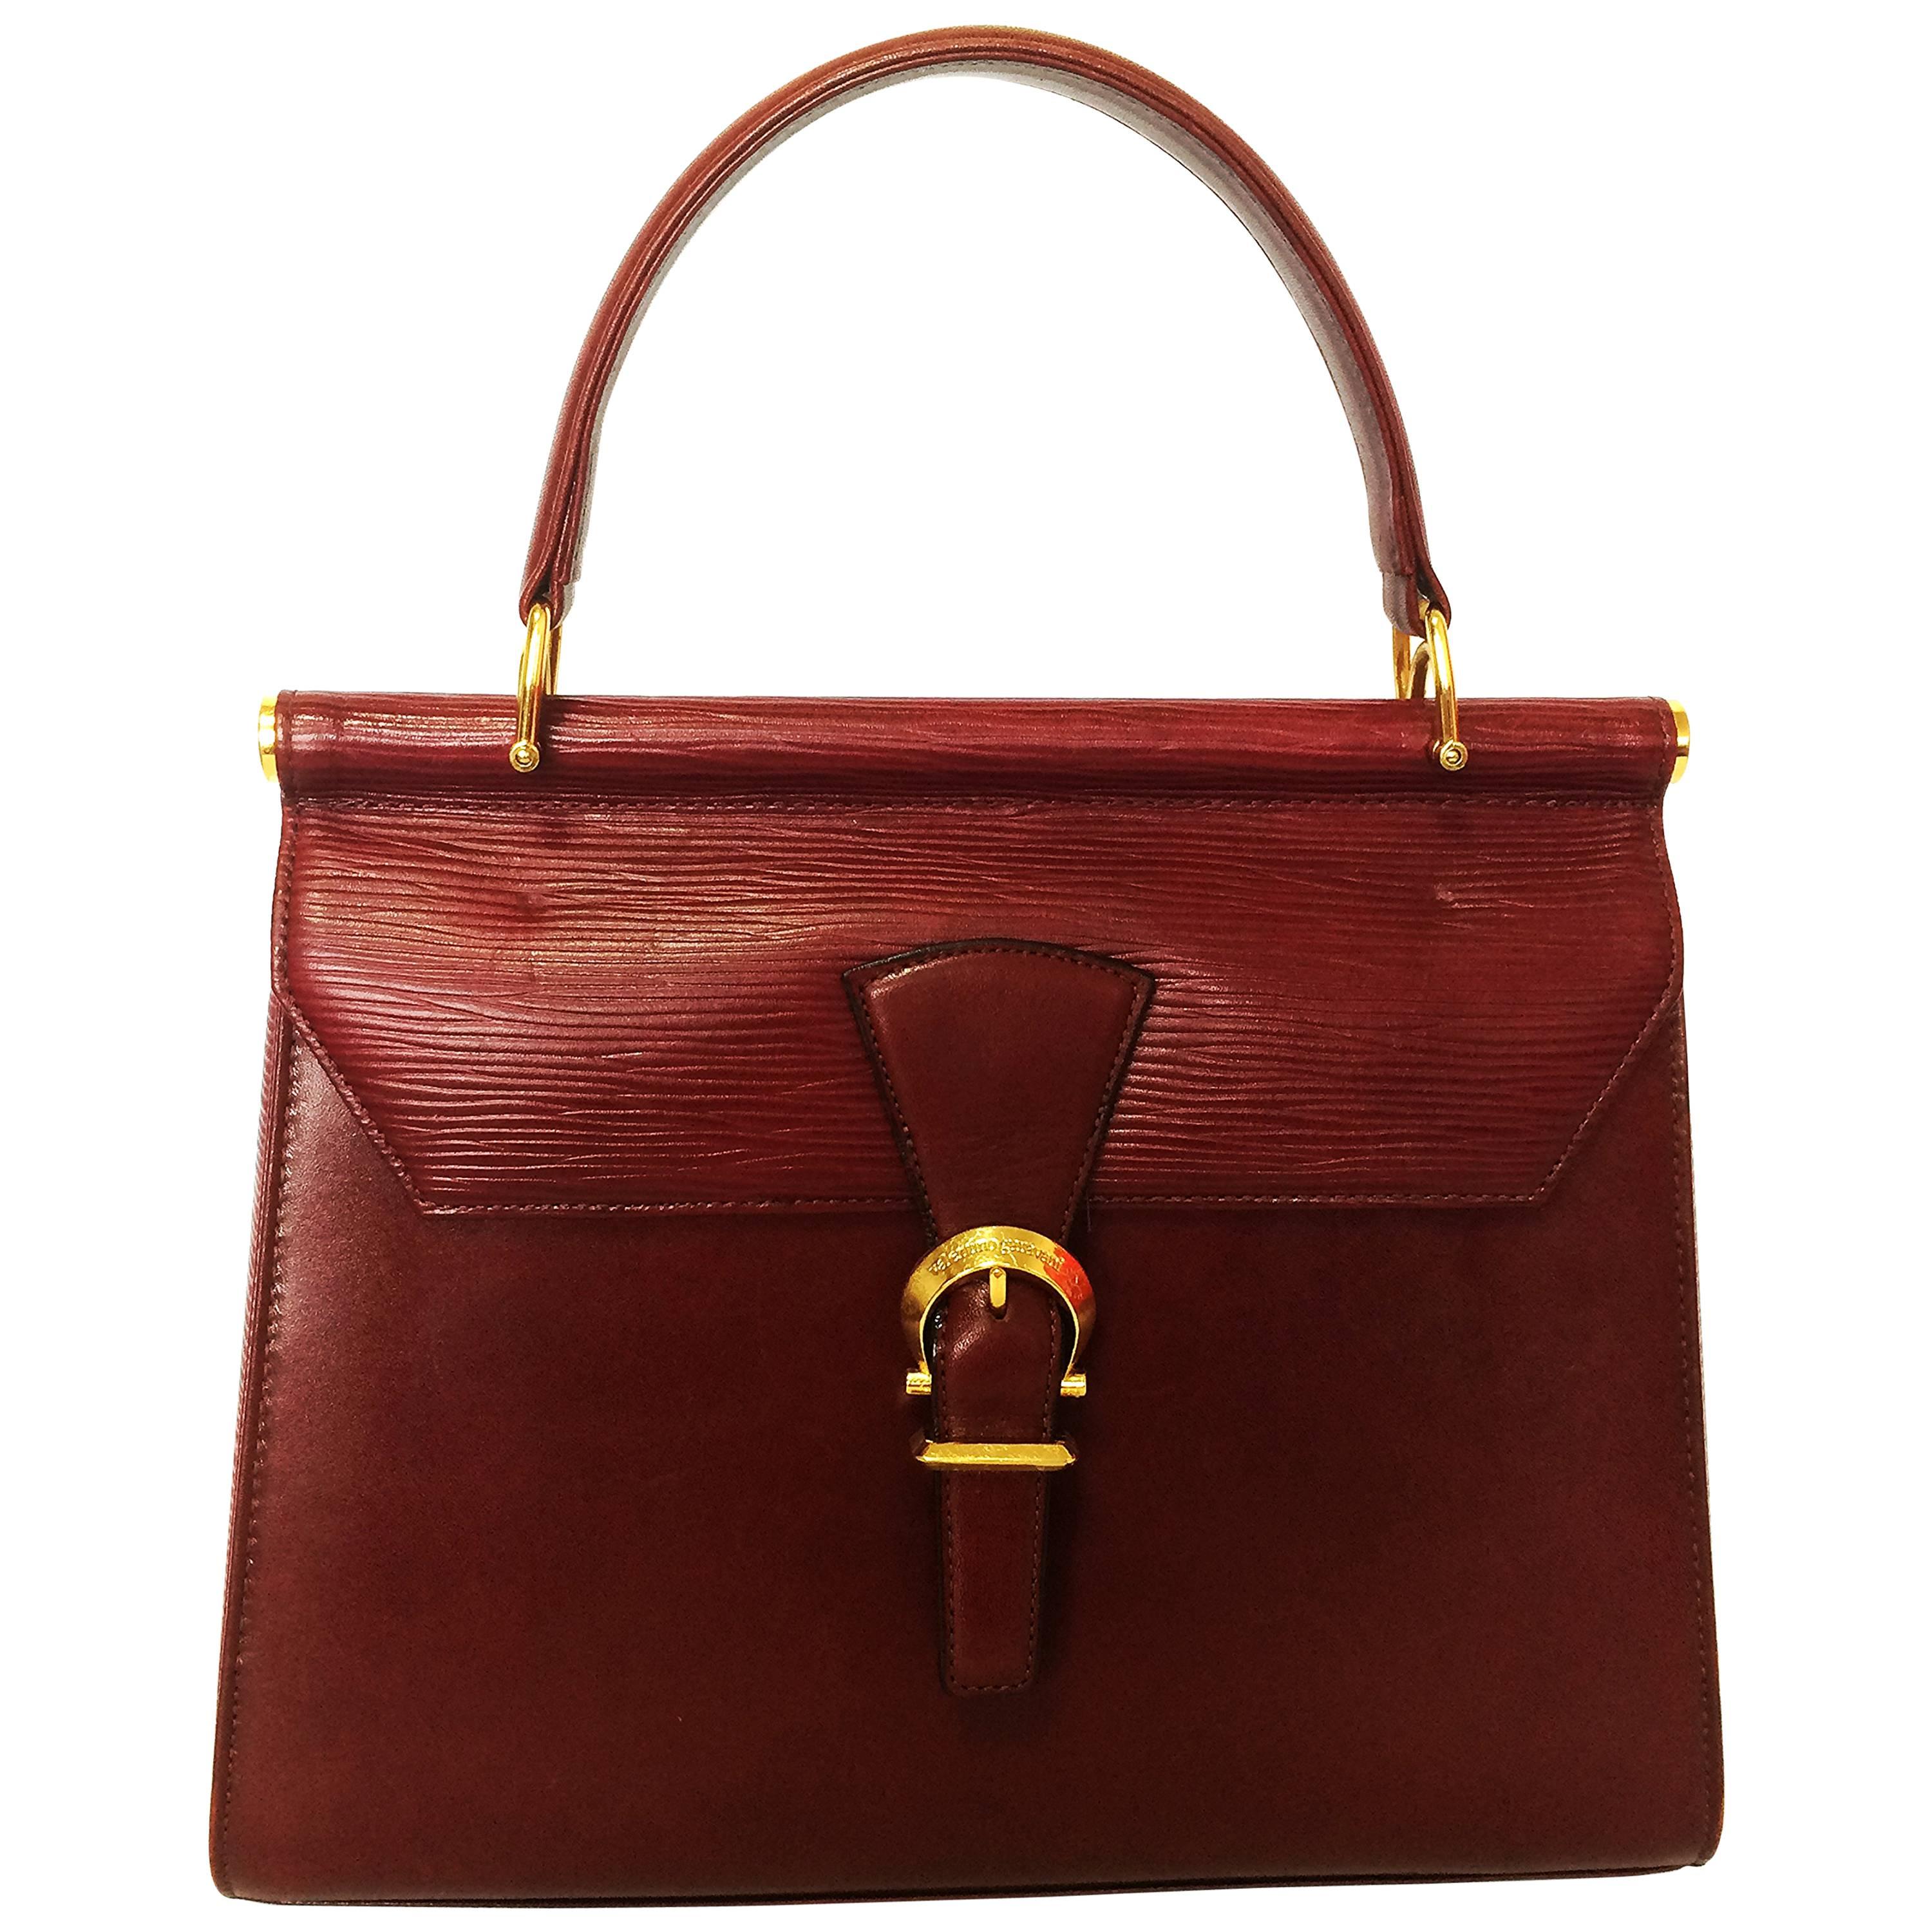 Vintage Valentino Garavani wine epi and smooth leather handbag with buckle flap.